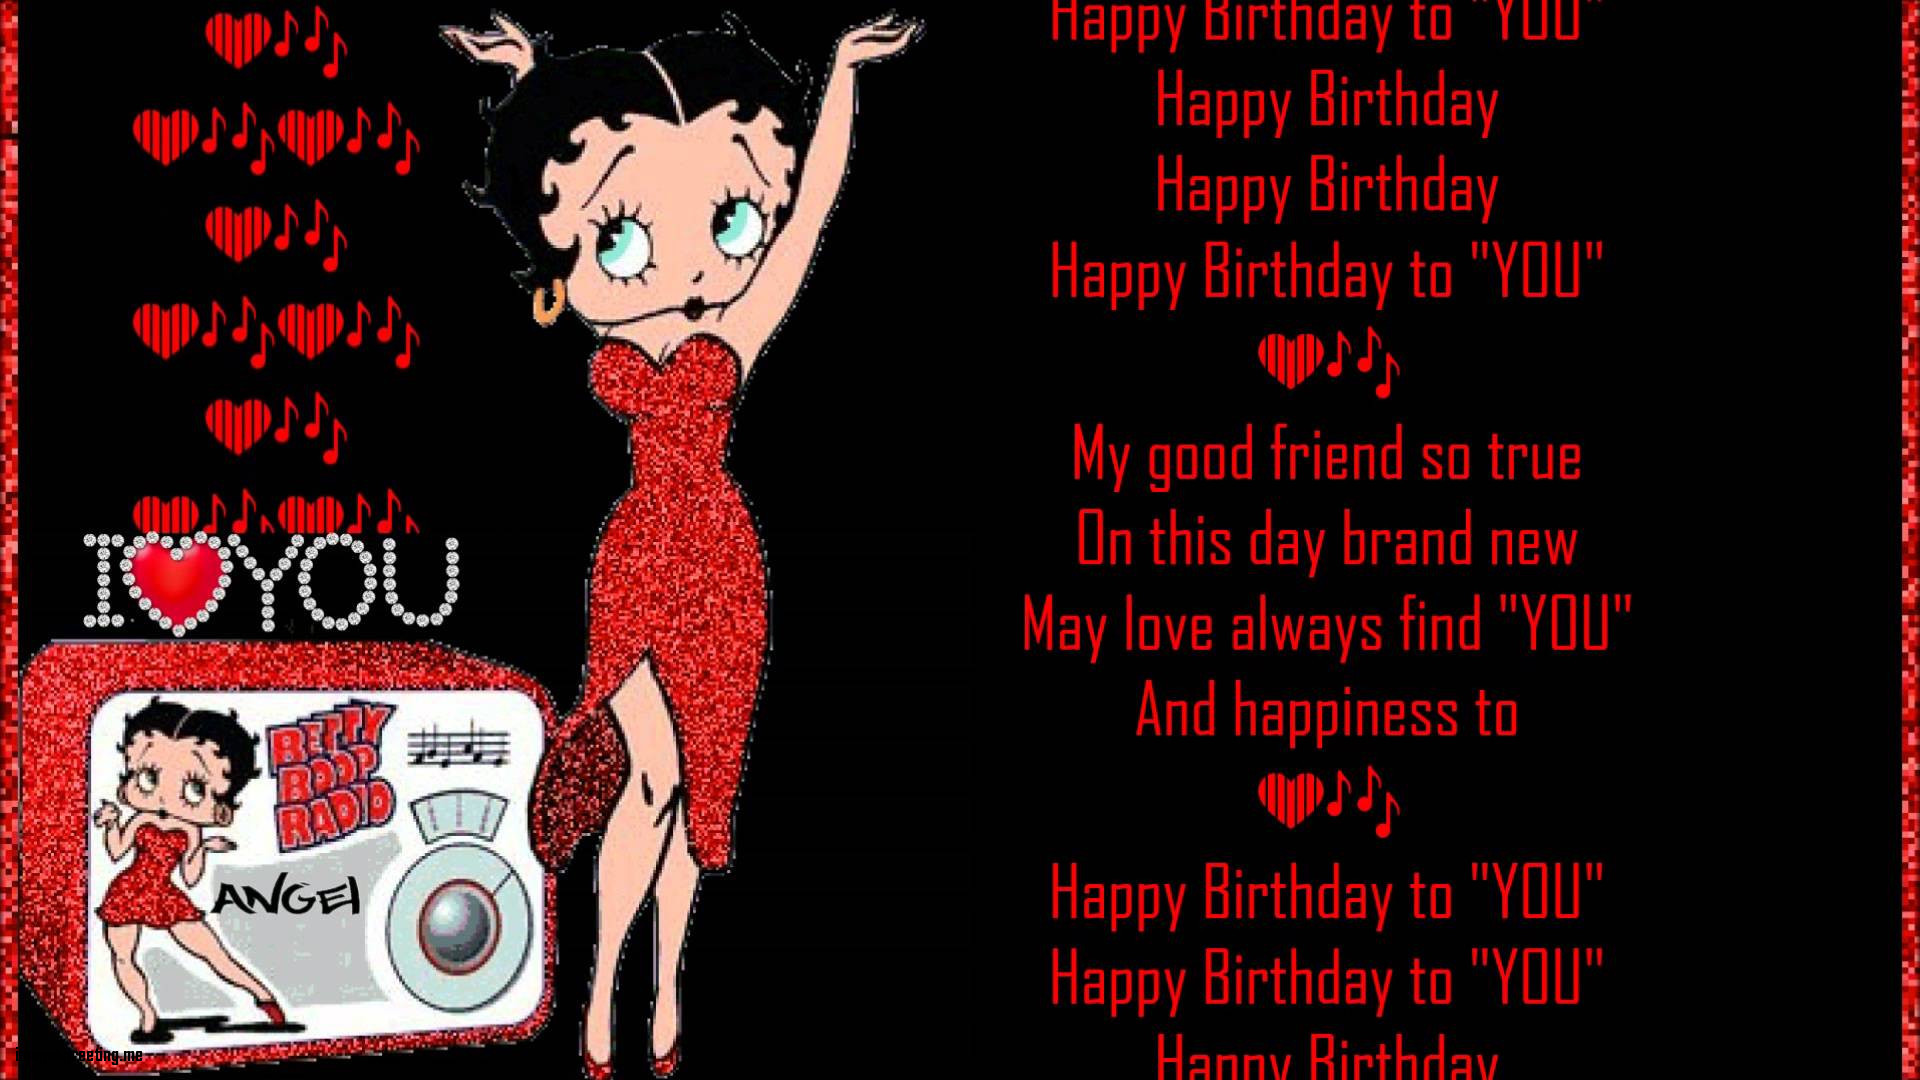 1920x1080 New Betty Boop Happy Birthday Images 3 Hd Wallpapers Buzz for Betty Boop  Happy Birthday Images